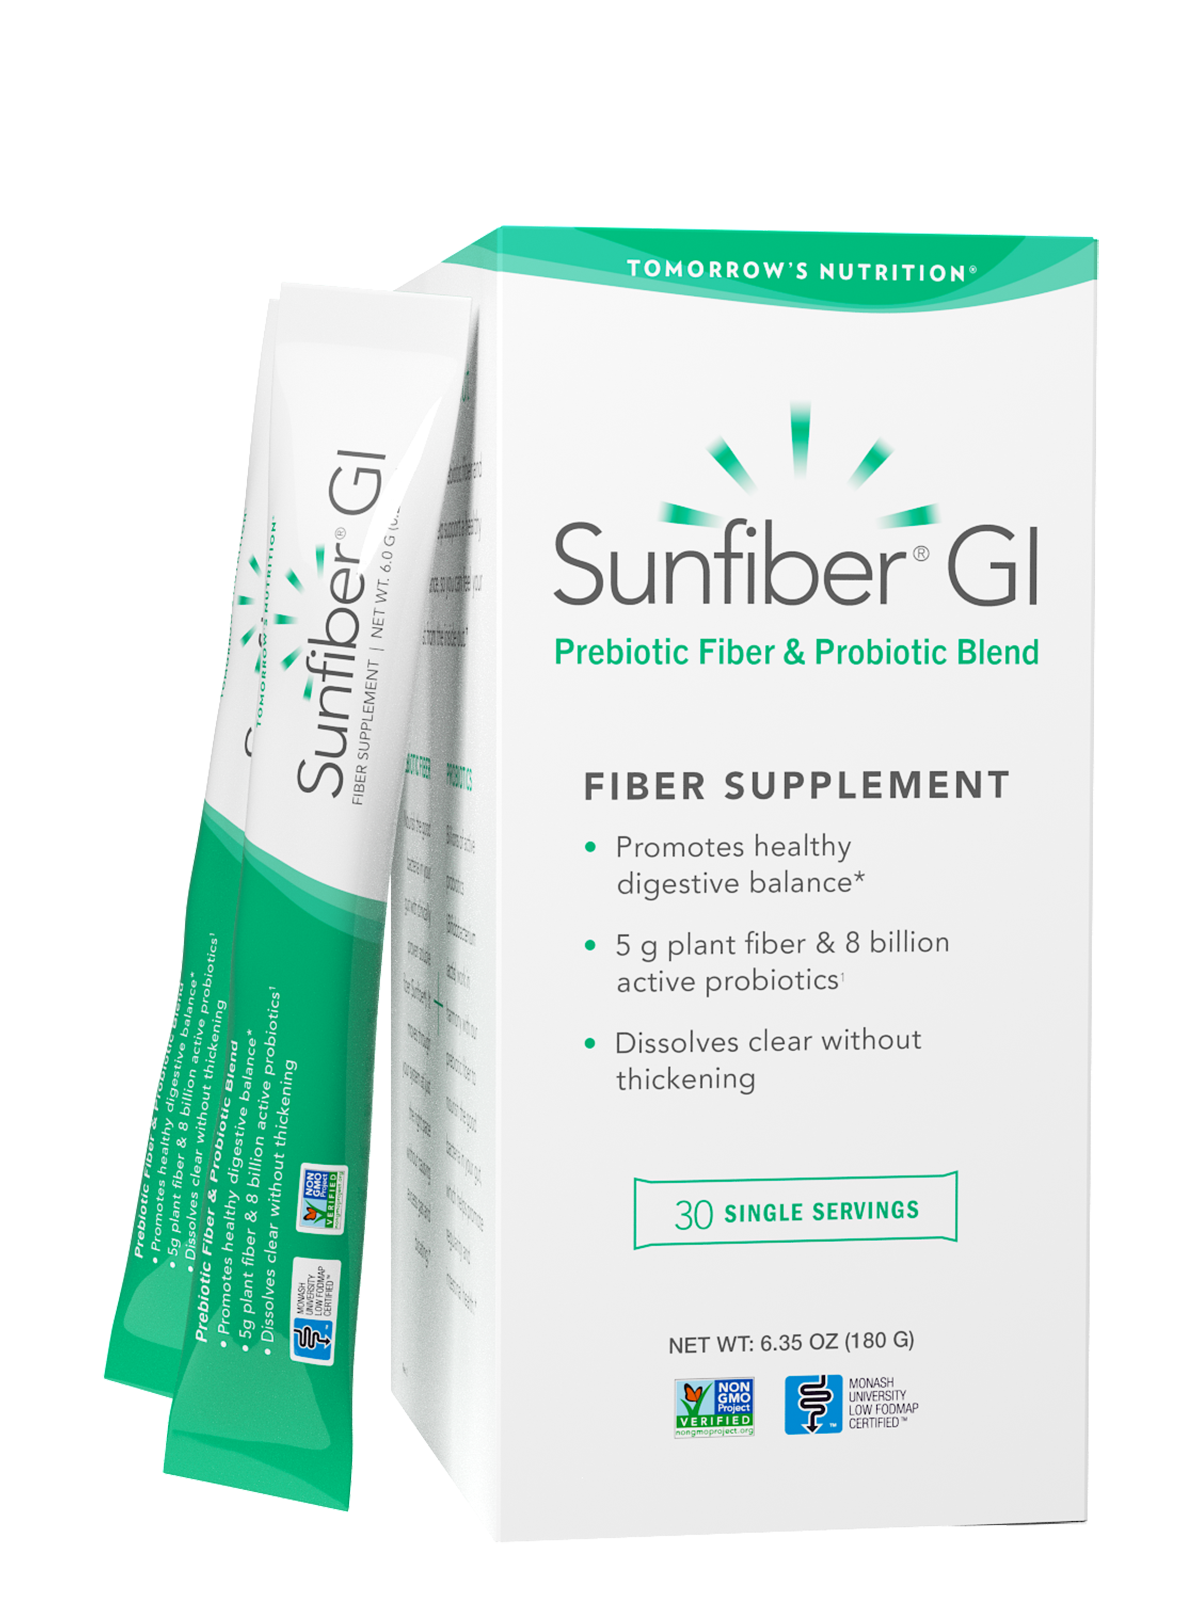 Sunfiber GI Prebiotic Fiber & Probiotic Blend